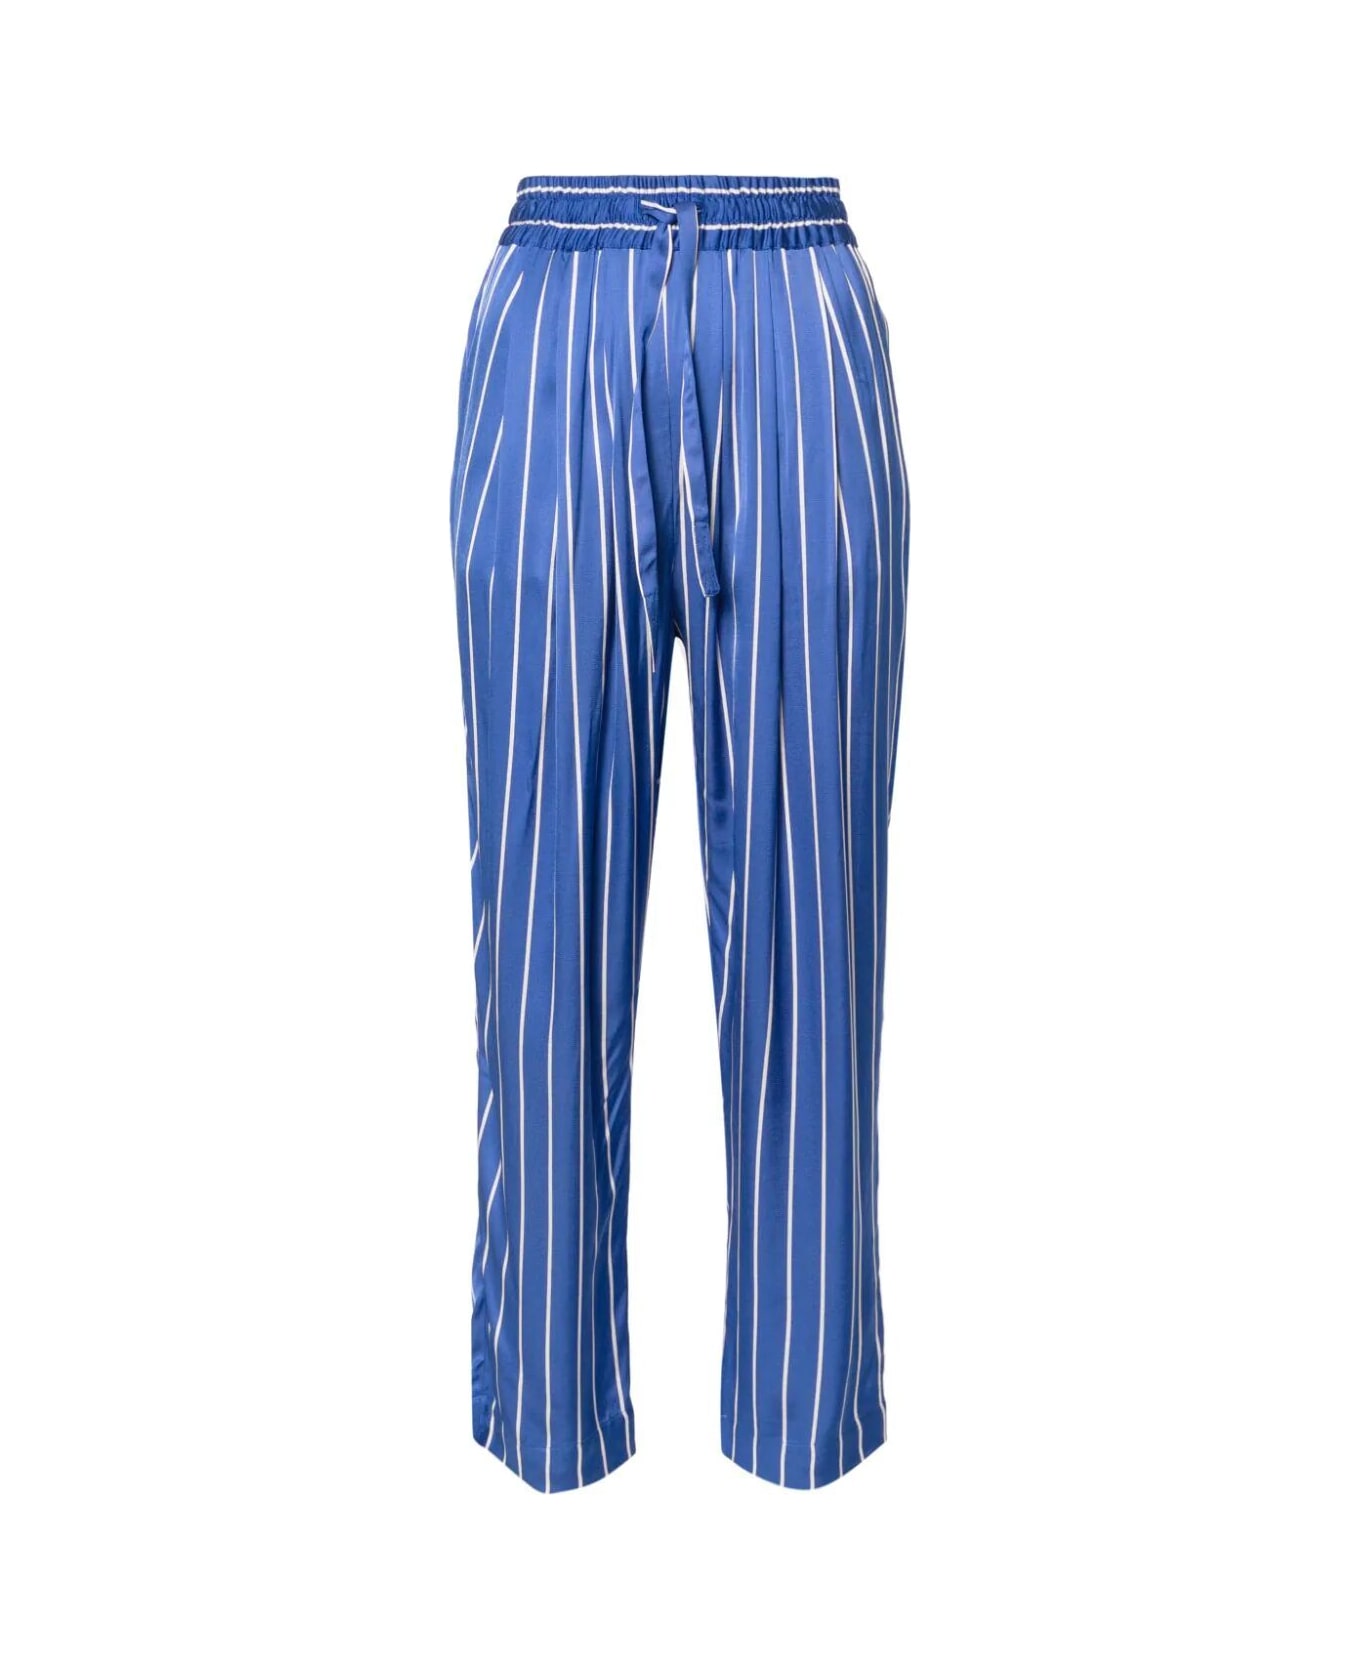 SEMICOUTURE Keza Trouser - Misty Blue Stripes ボトムス